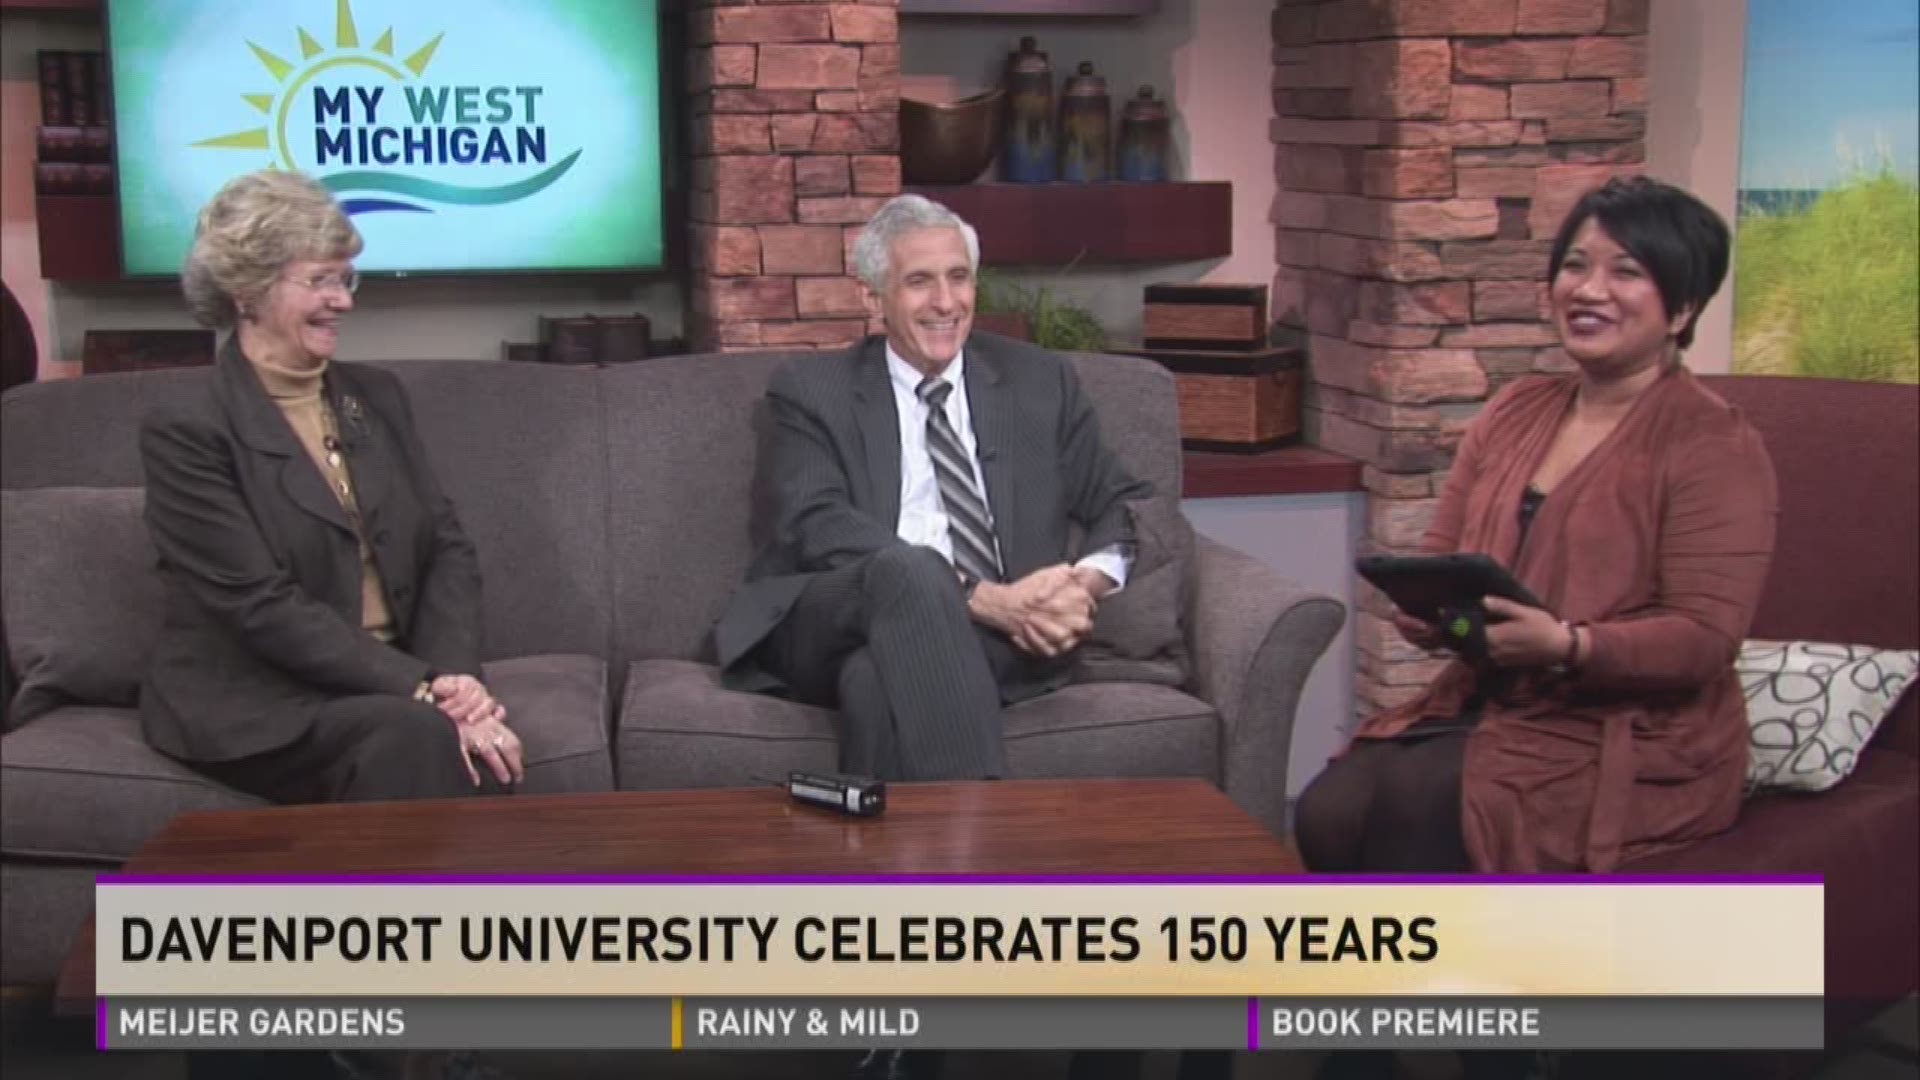 Davenport University celebrates 150 years, looks forward to many more